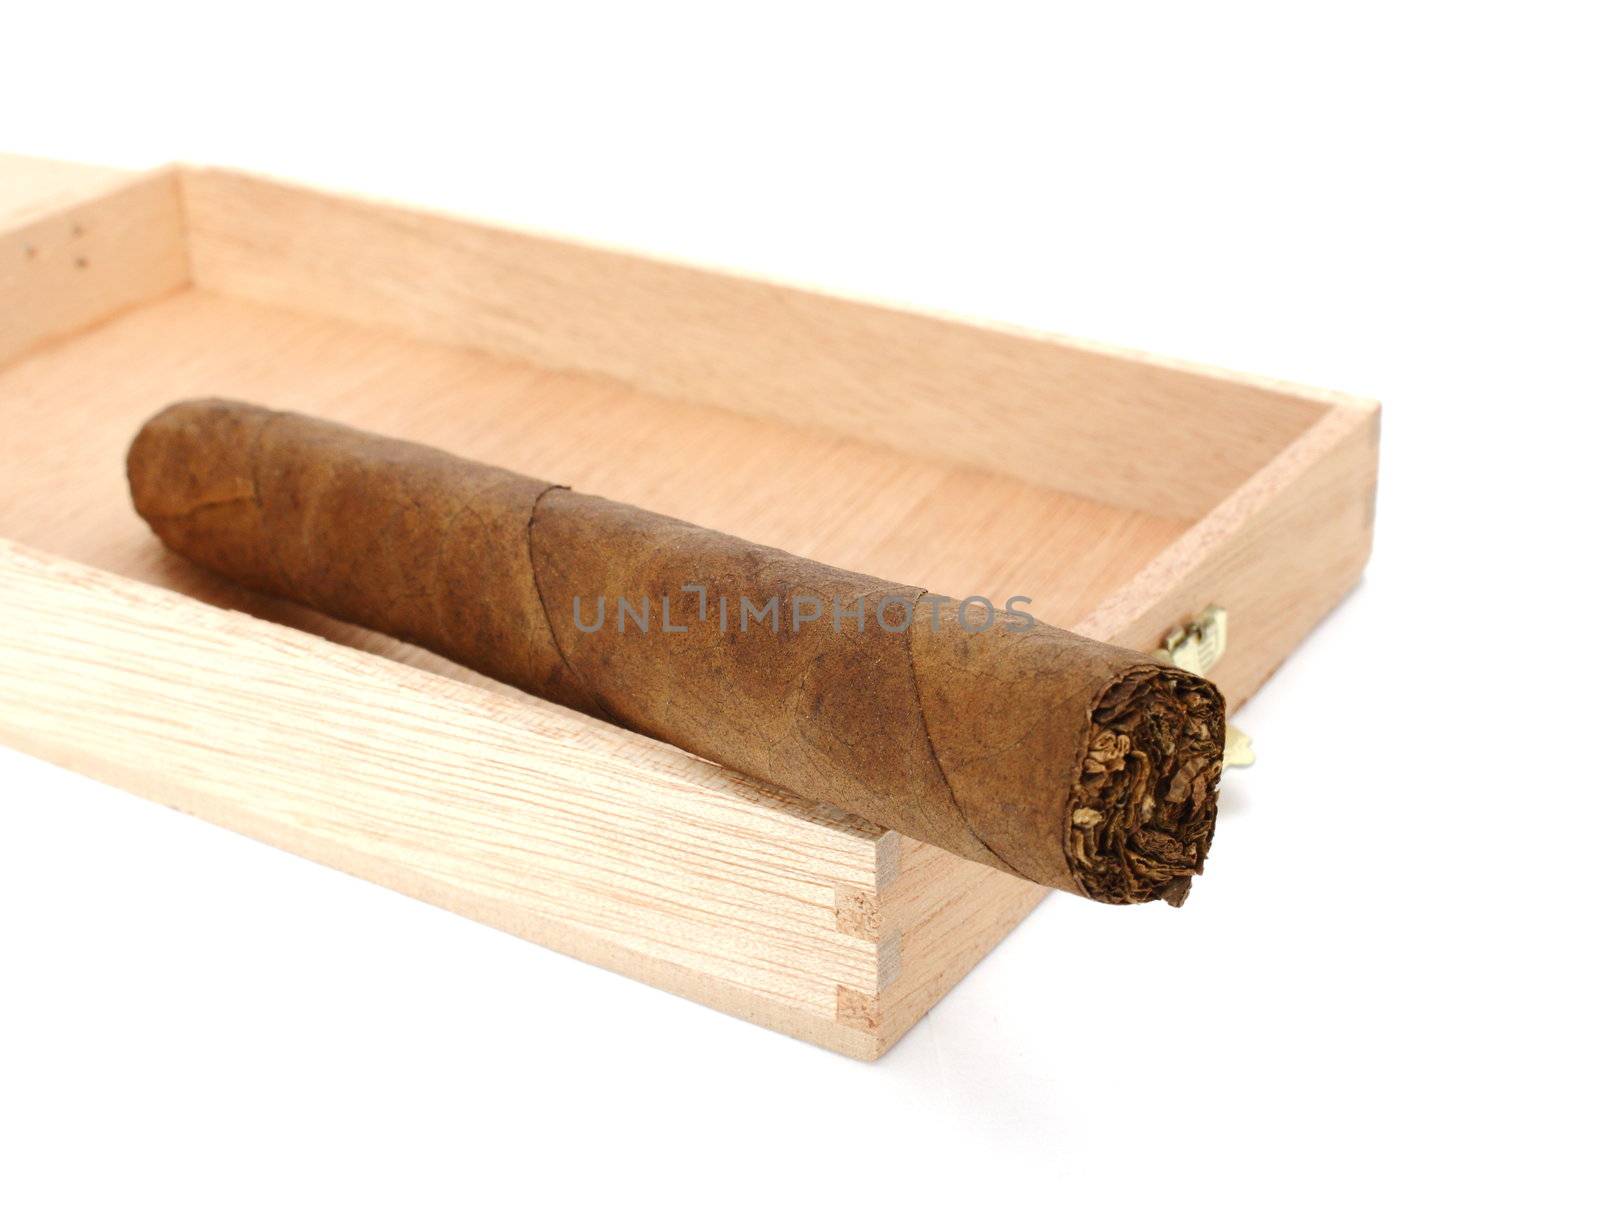 cuban cigar in wooden box by taviphoto